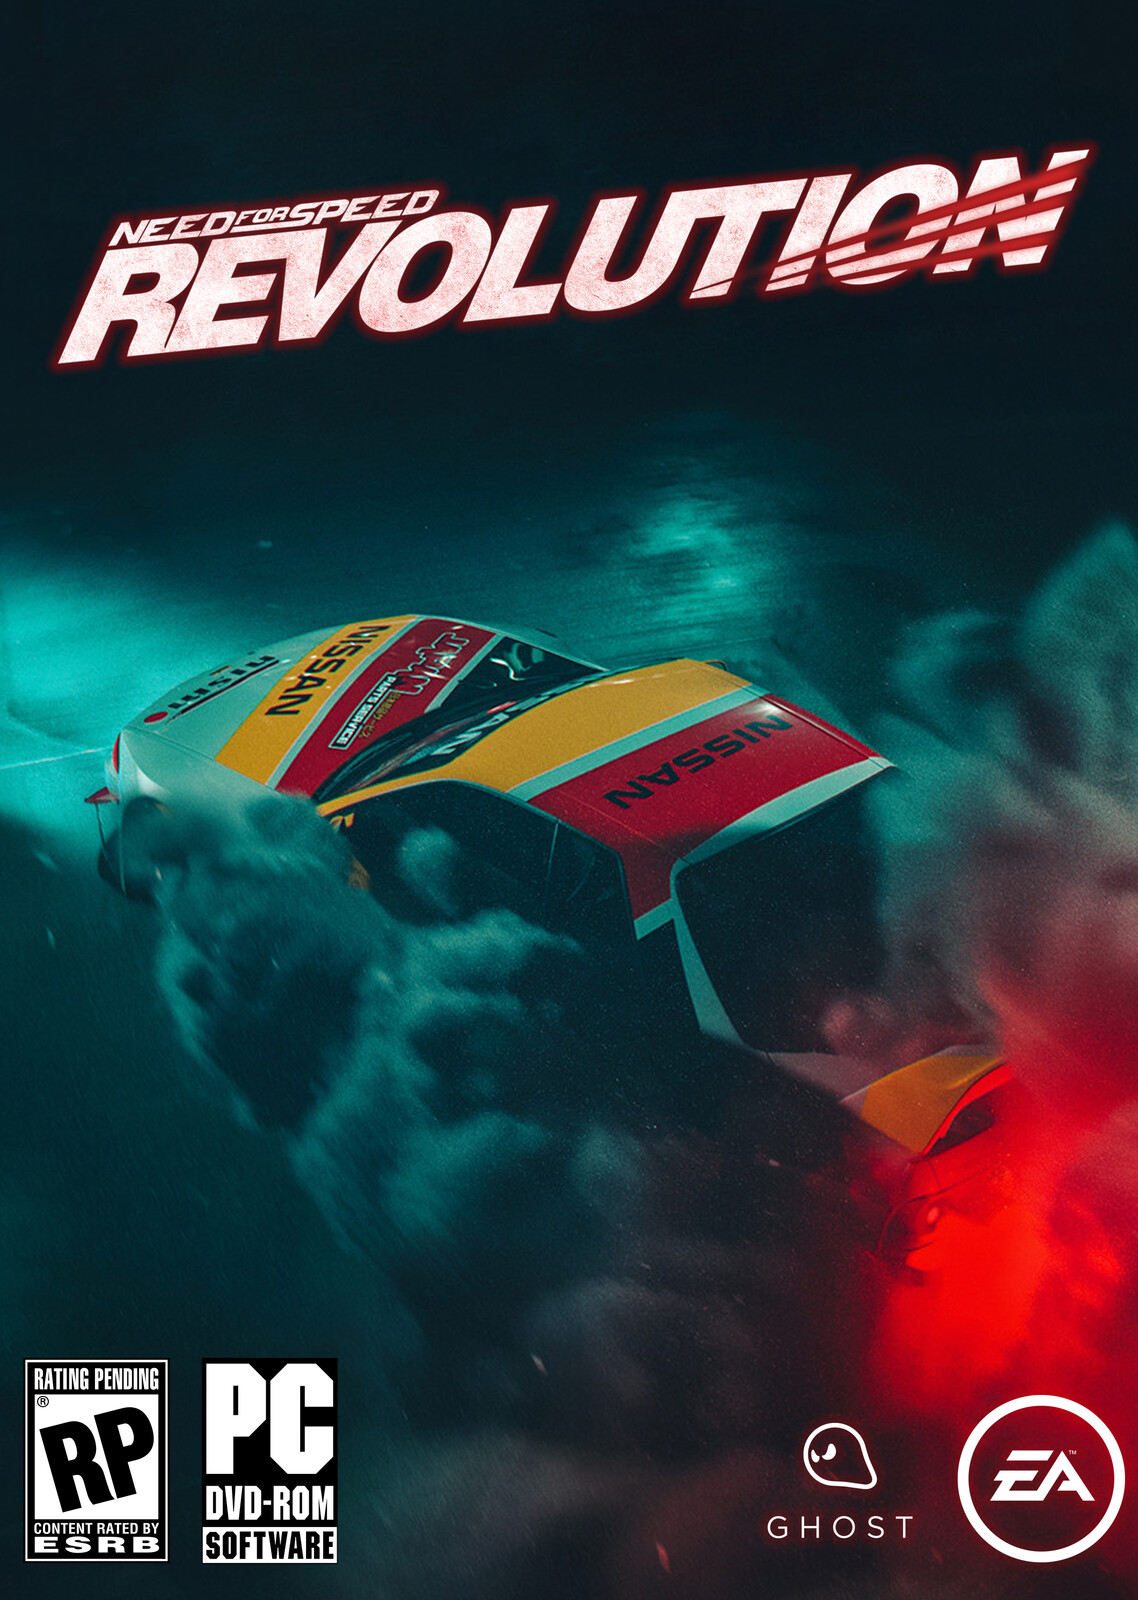 Need for Speed Revolution - 02 (Based on Khyzyl Saleem art)